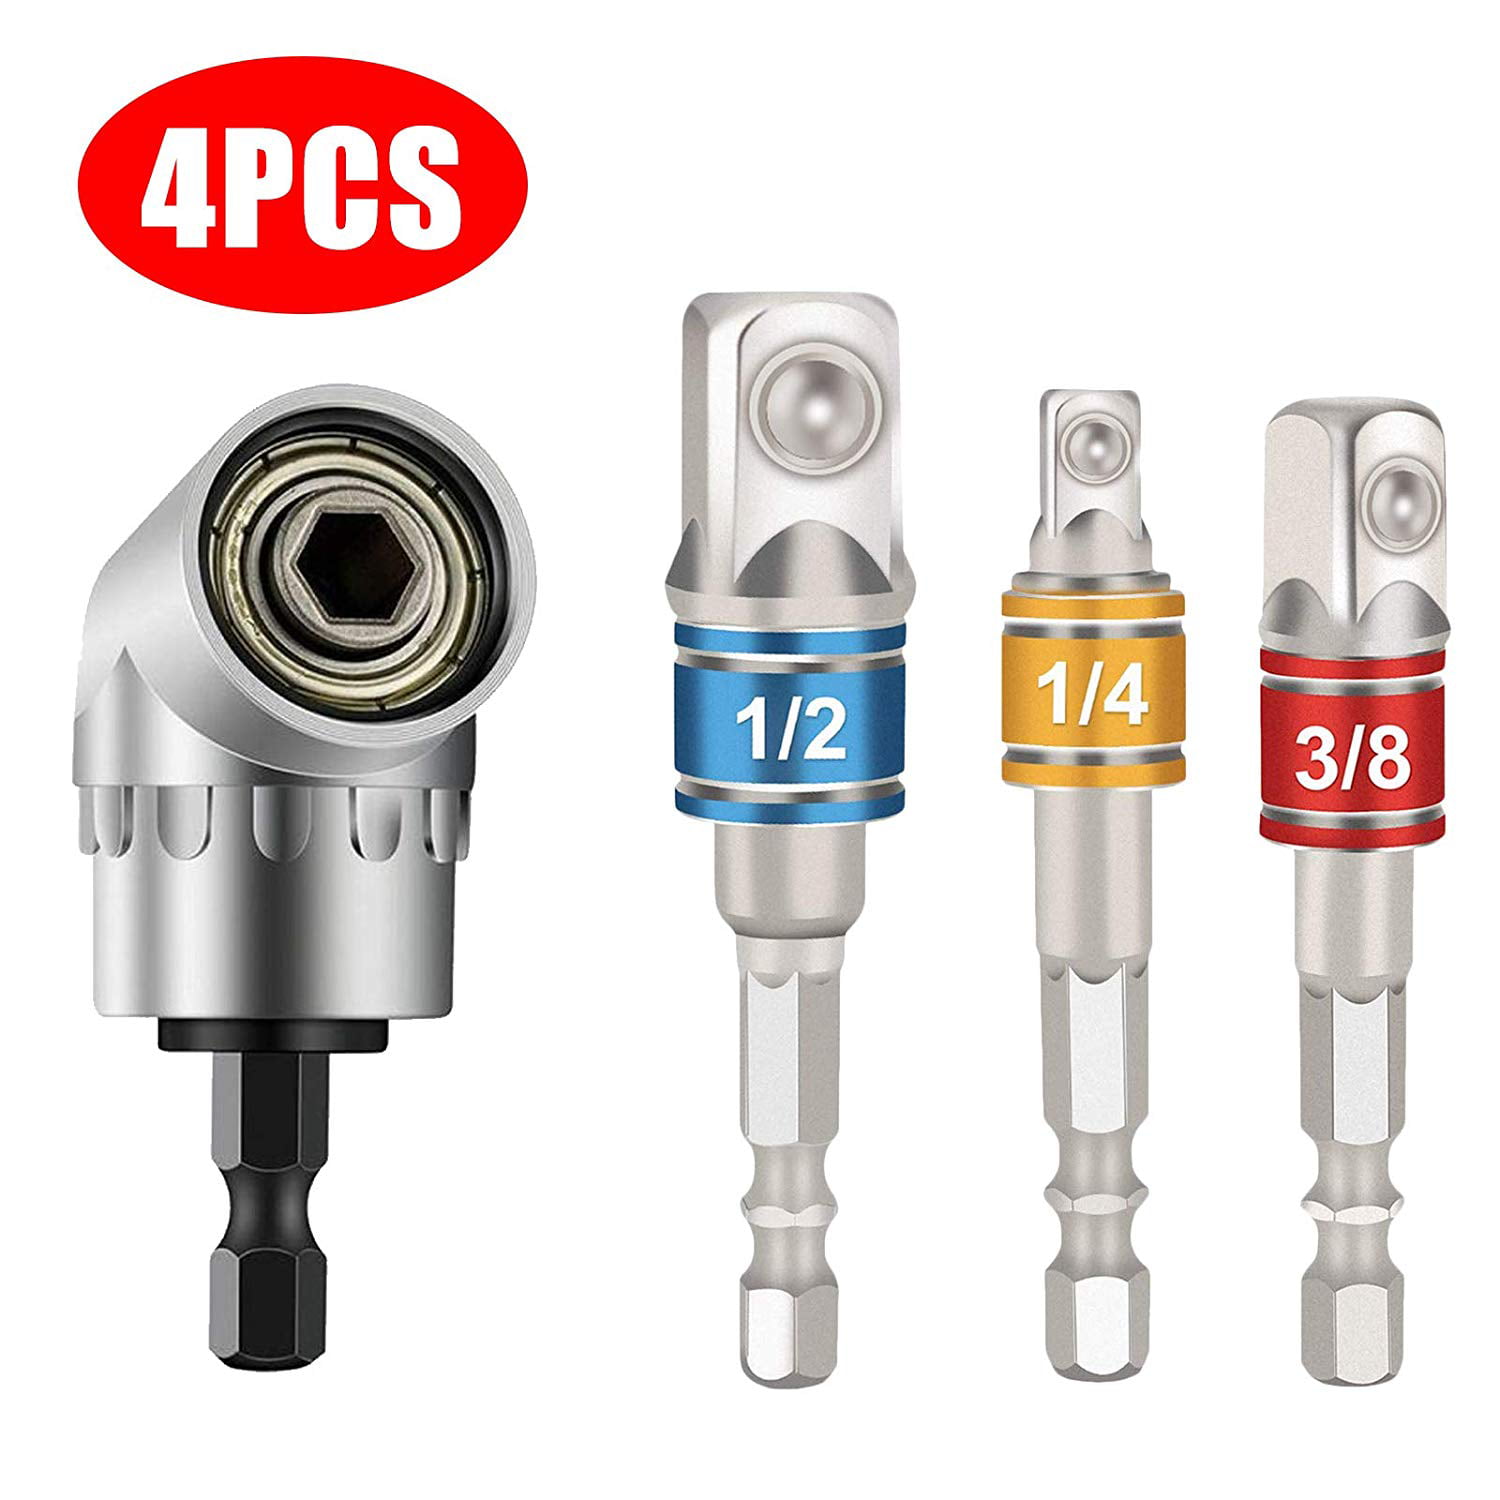 3PCS 1/4 3/8 1/2 Inch Hex Shank Socket Adapter to Impact Driver Drill Bit